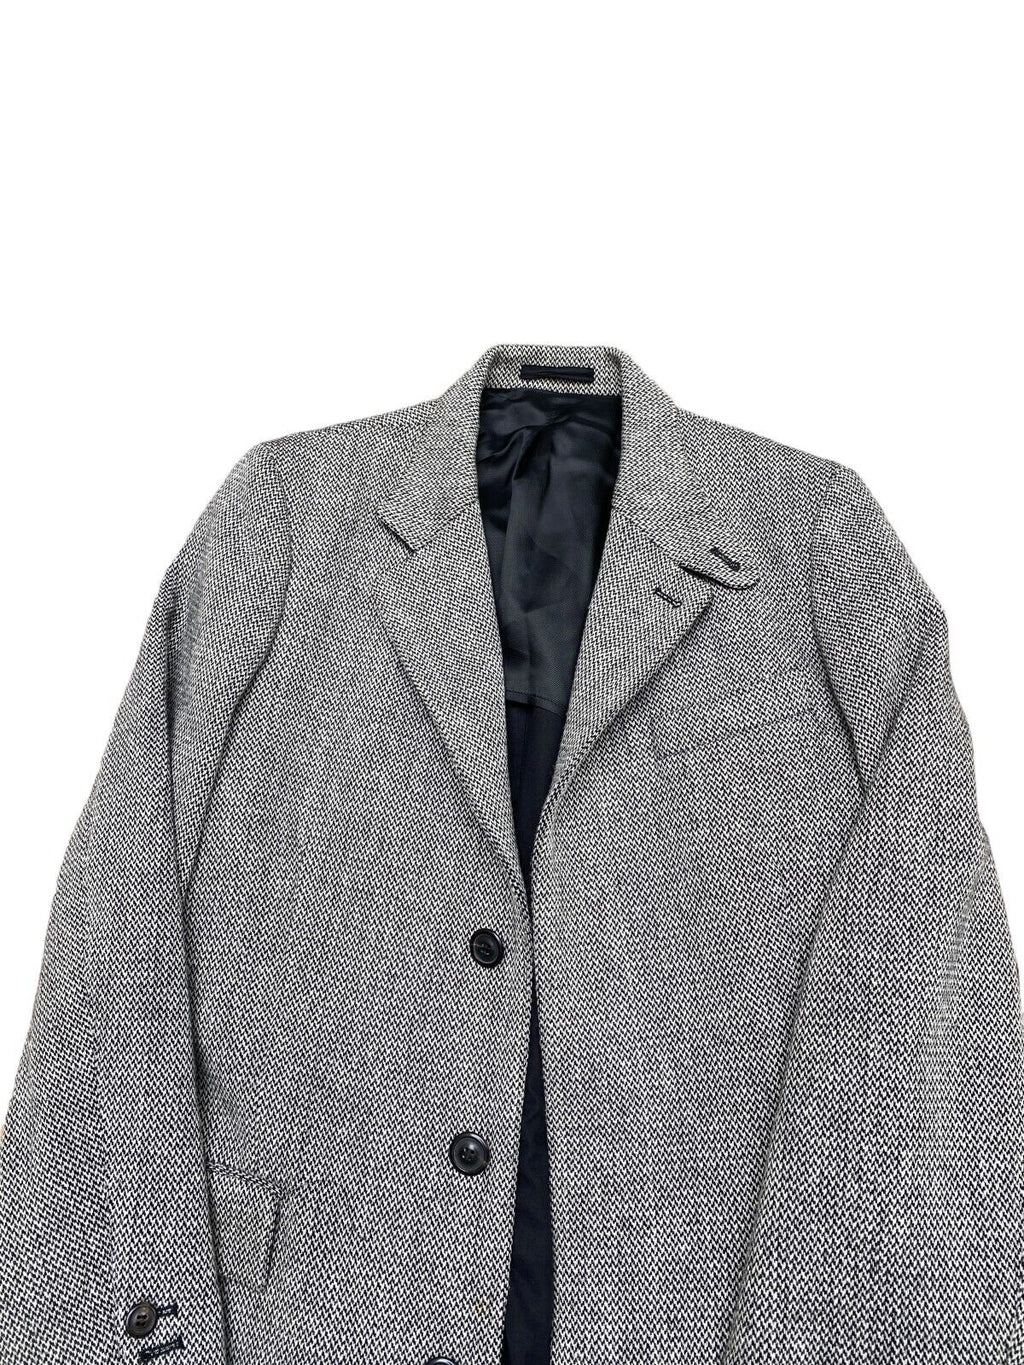 Archive FW 2004 Grey / Black Herringbone Long Coat Size 50